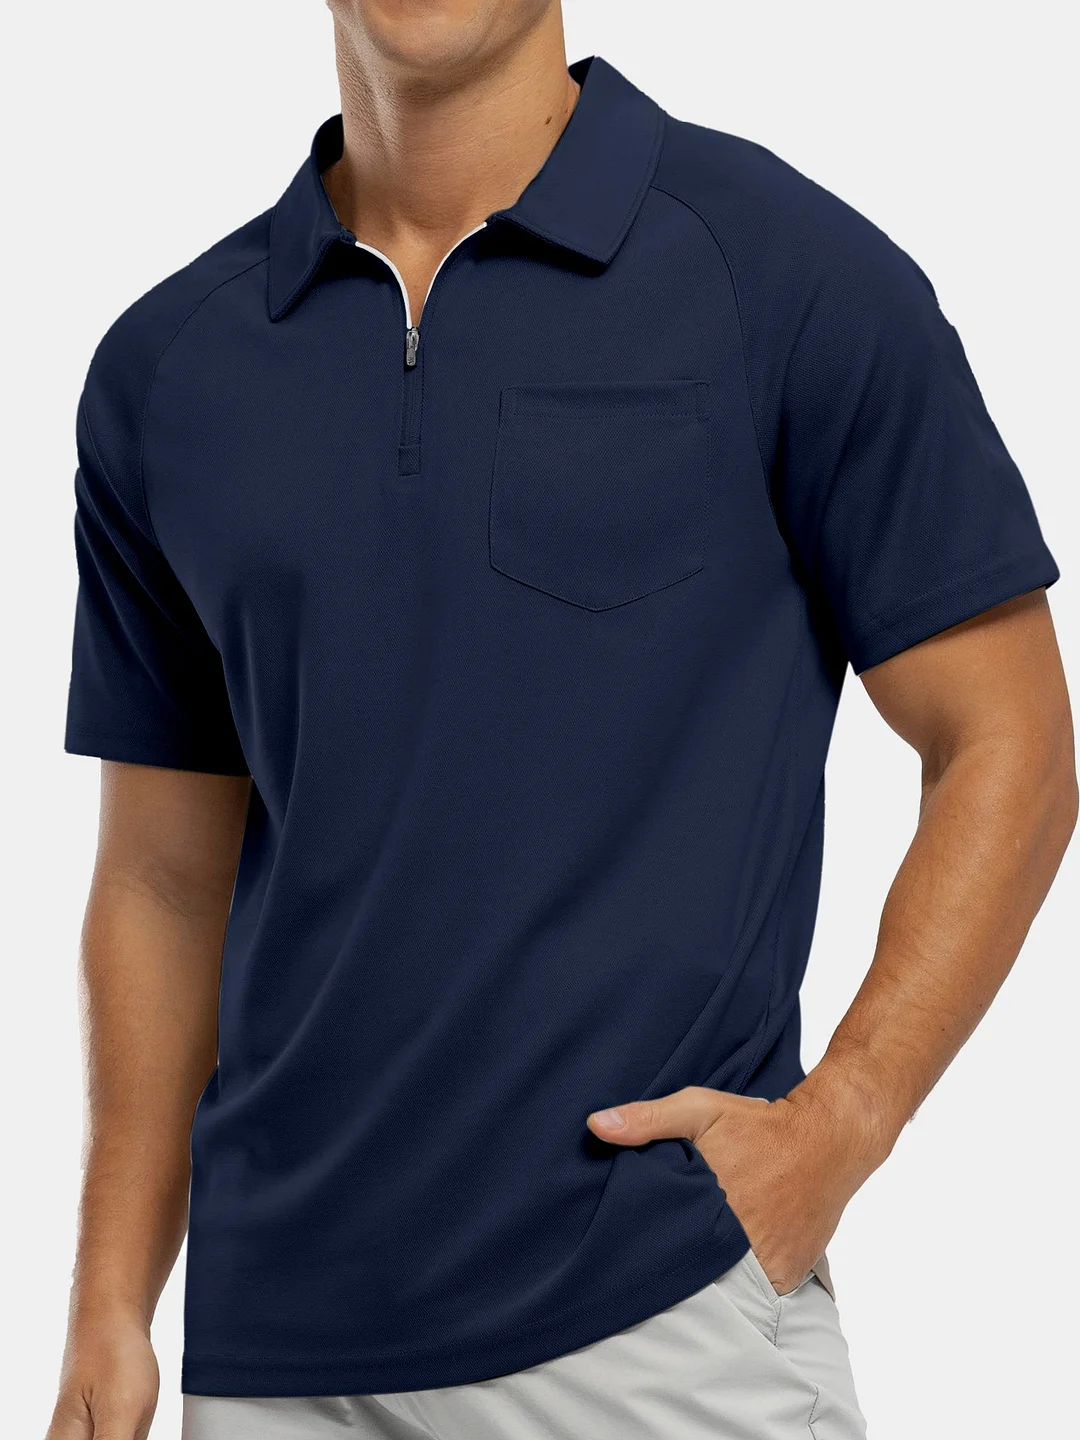 Men's Everyday Casual Raglan Sleeve Zipper Short Sleeve POLO Shirt